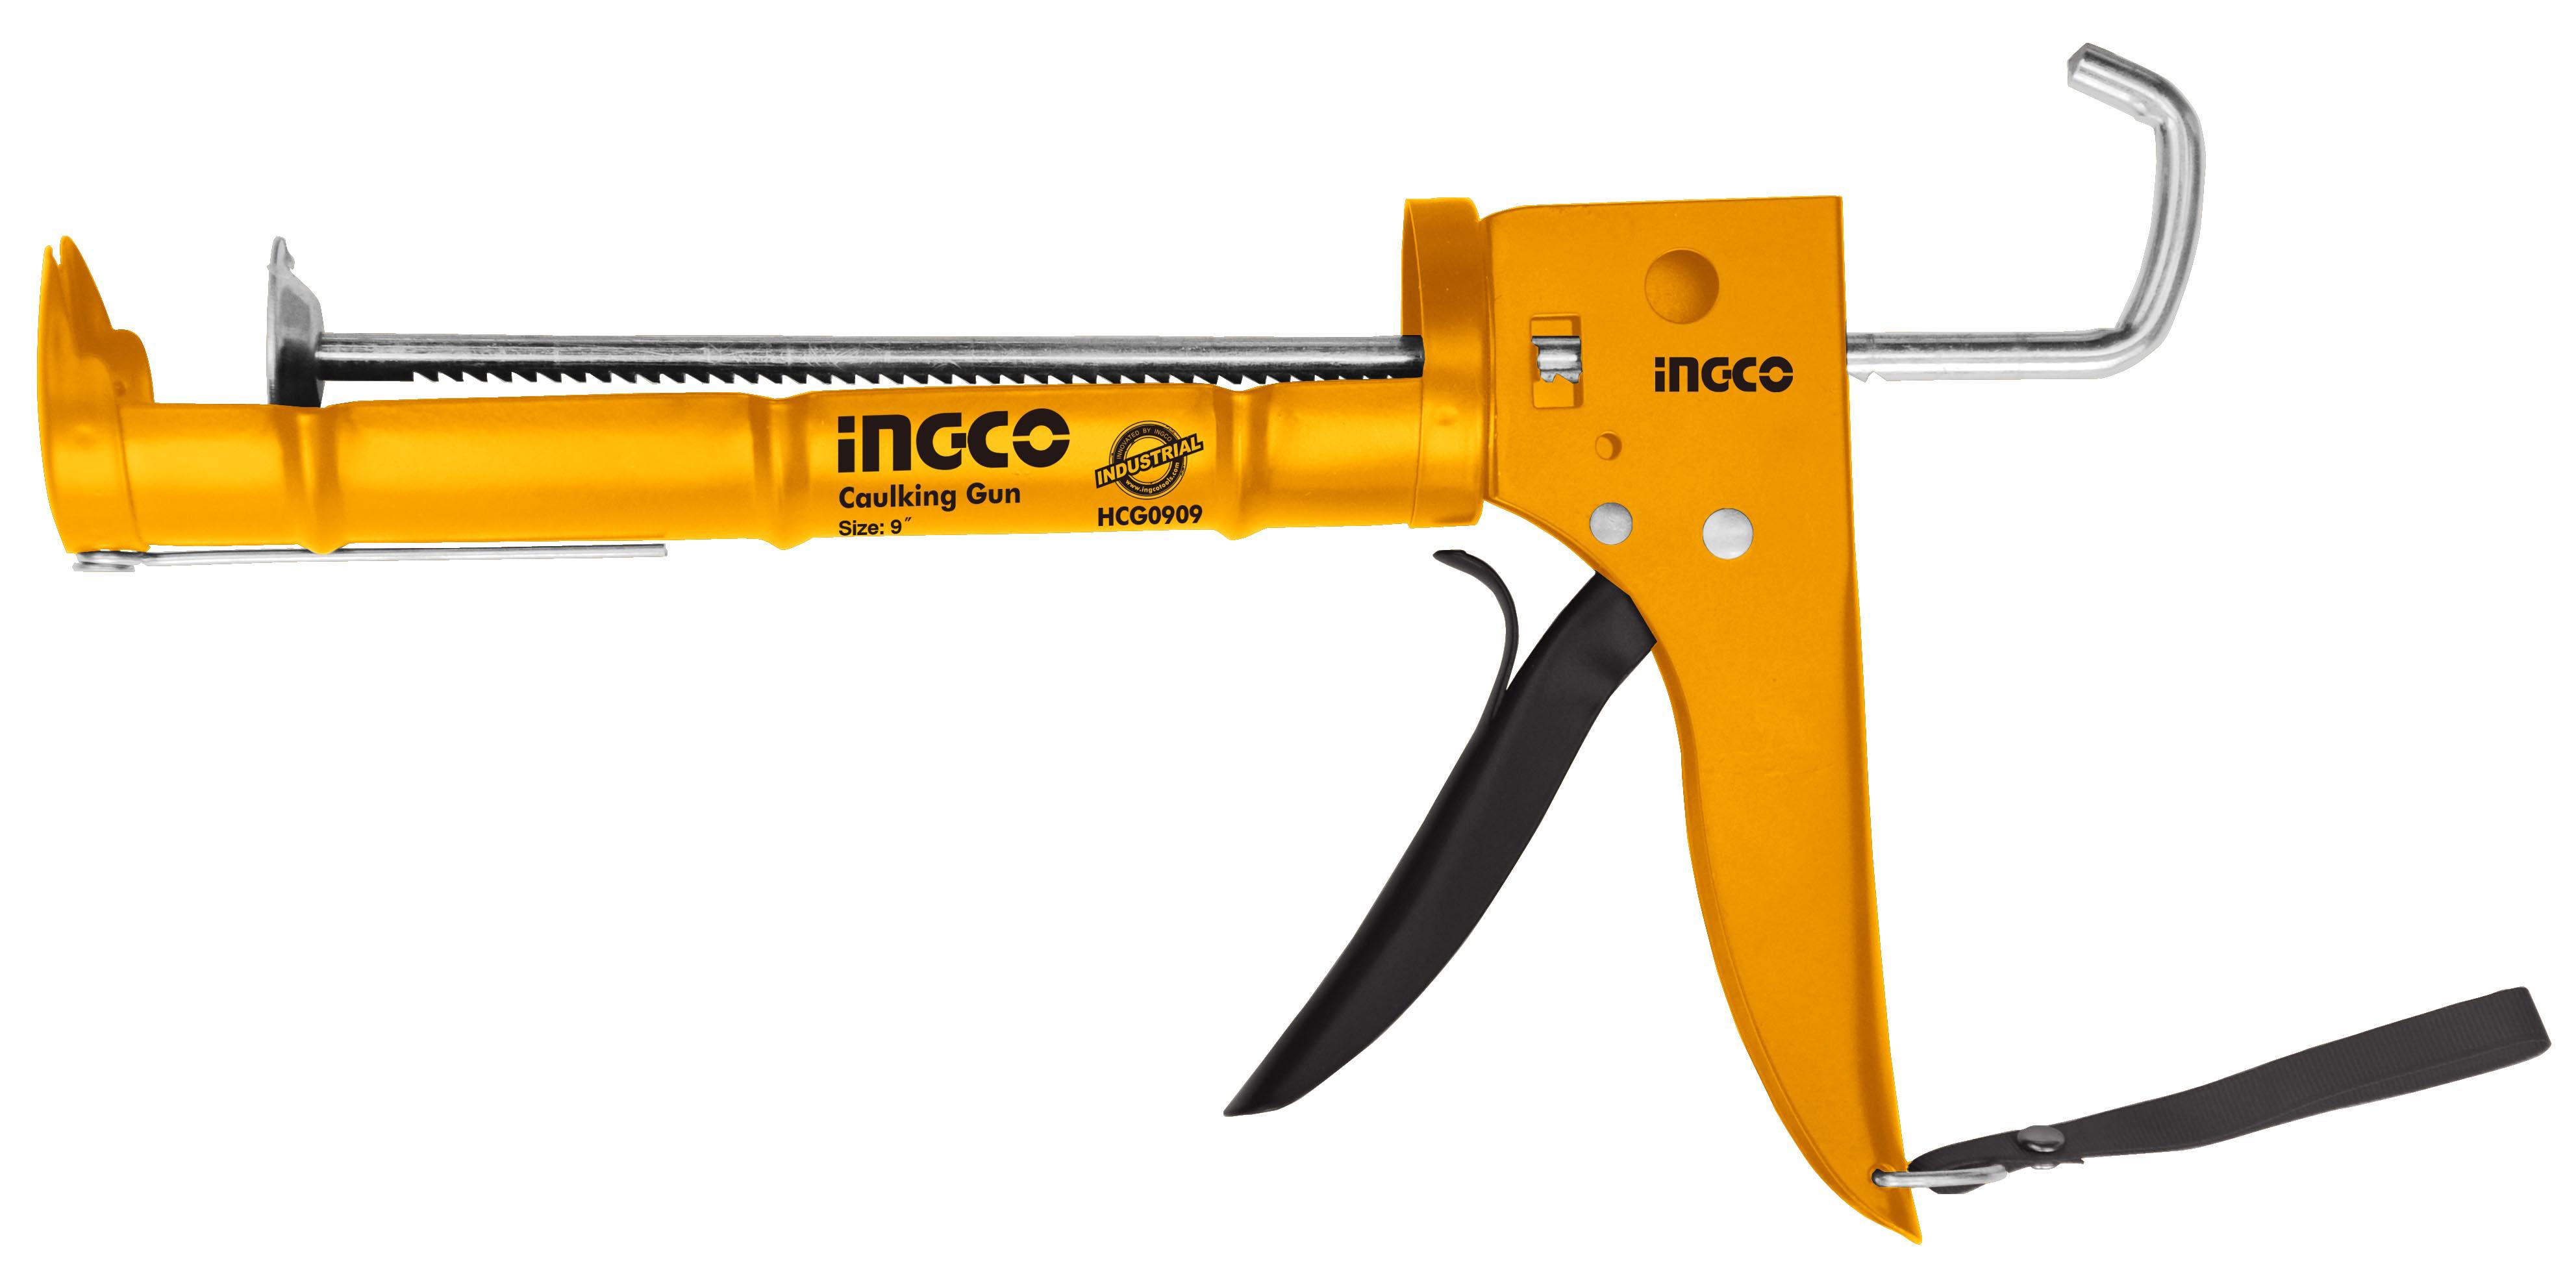 Pistolet silicone 9 pouces ingco - Ingco